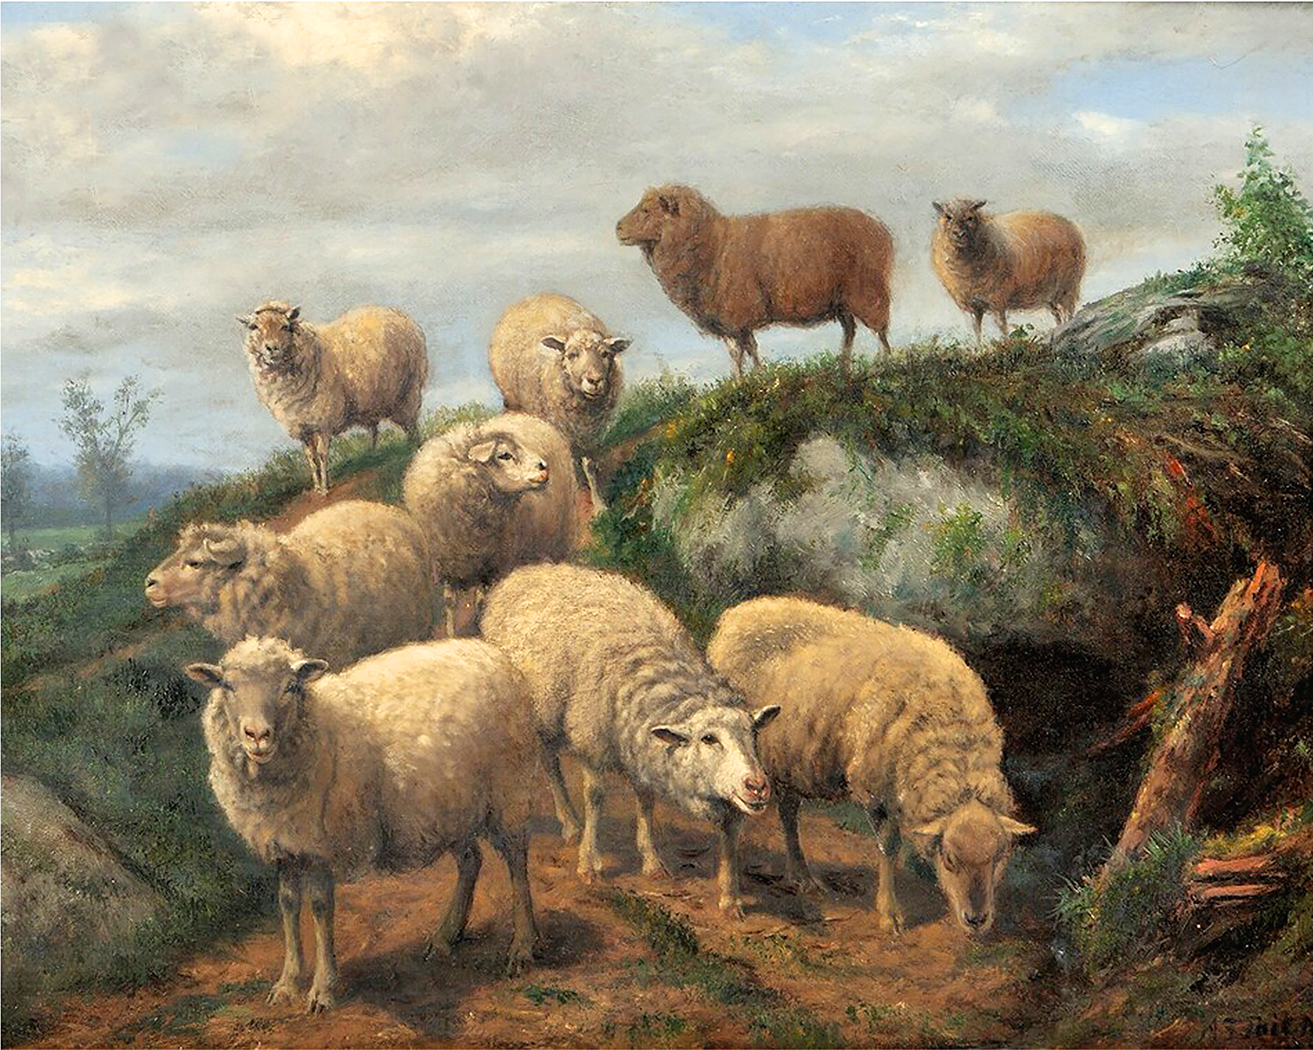 Farm/Pastoral Farm Flock of Sheep on Path Framed Oil Painting Print on Canvas